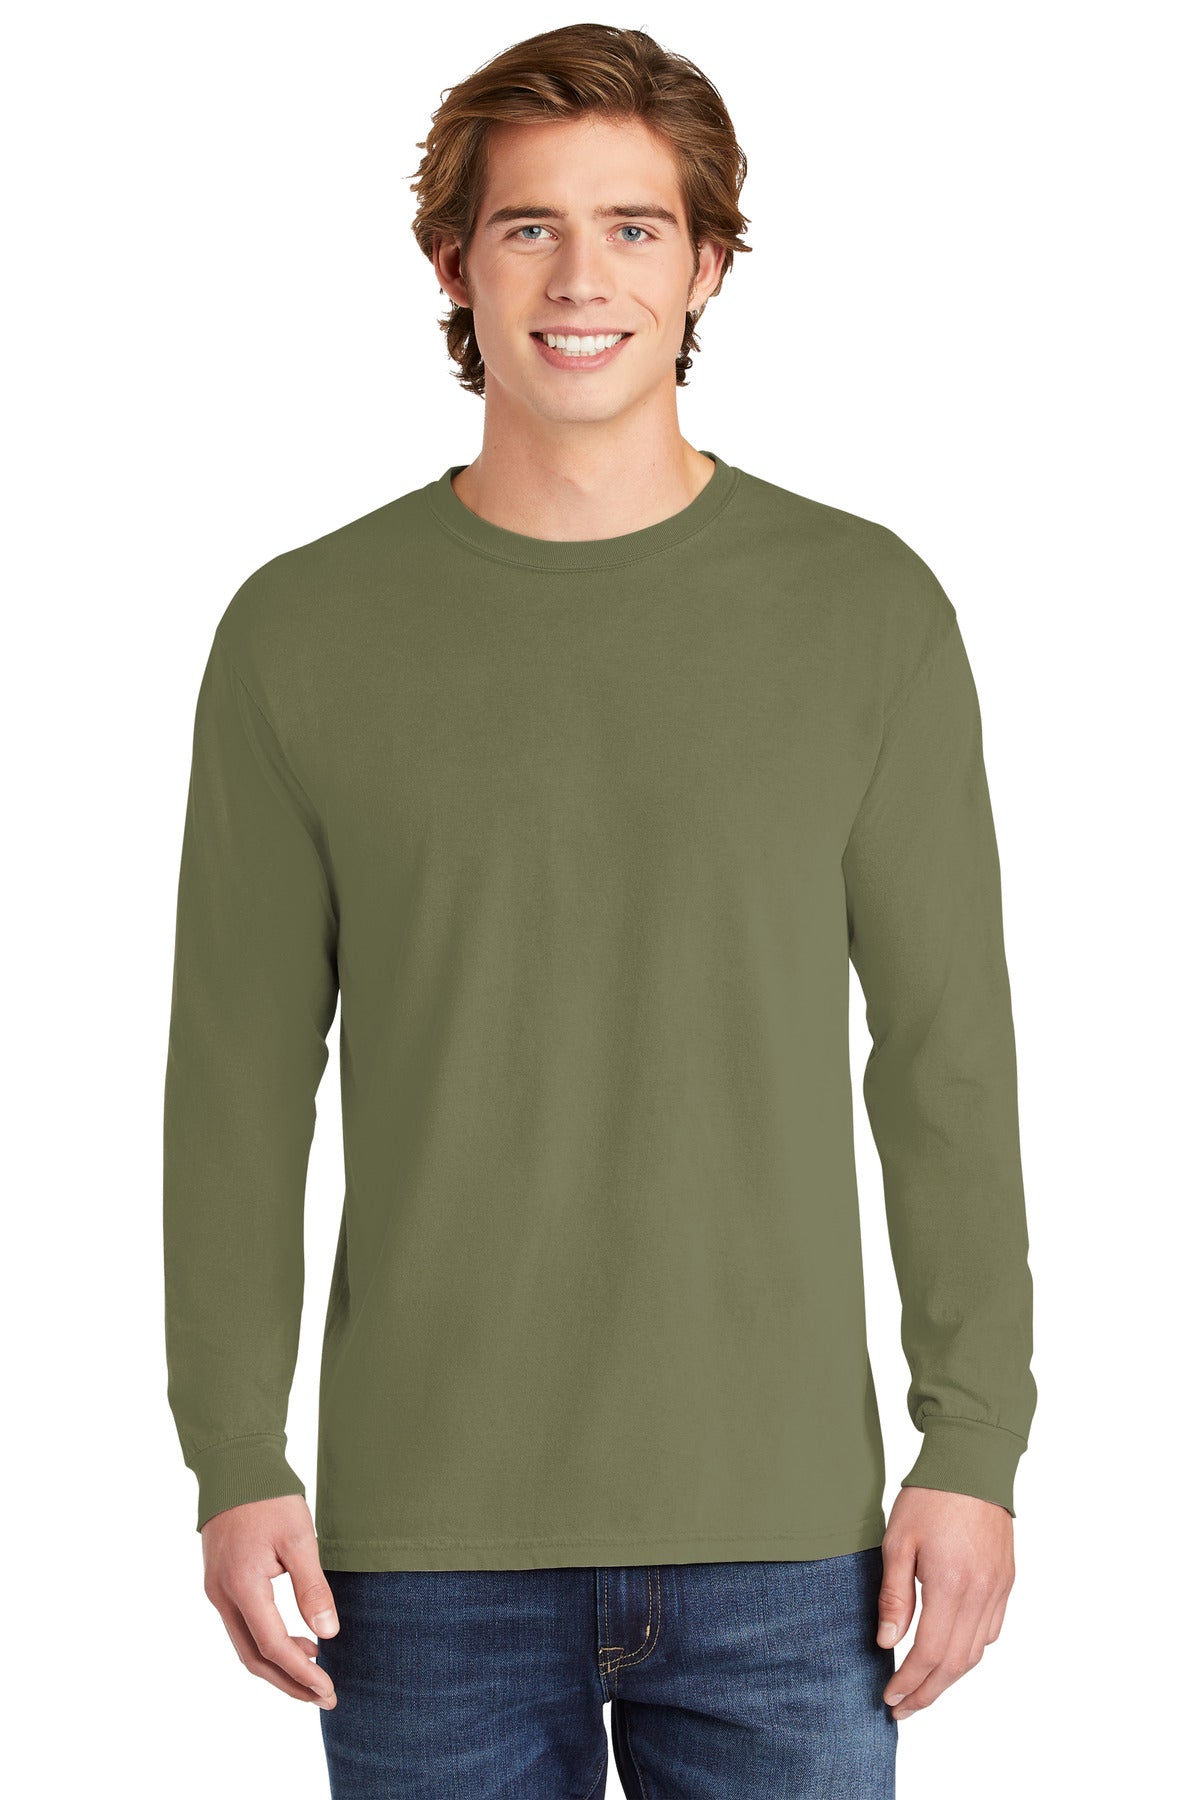 T-Shirts Khaki Comfort Colors